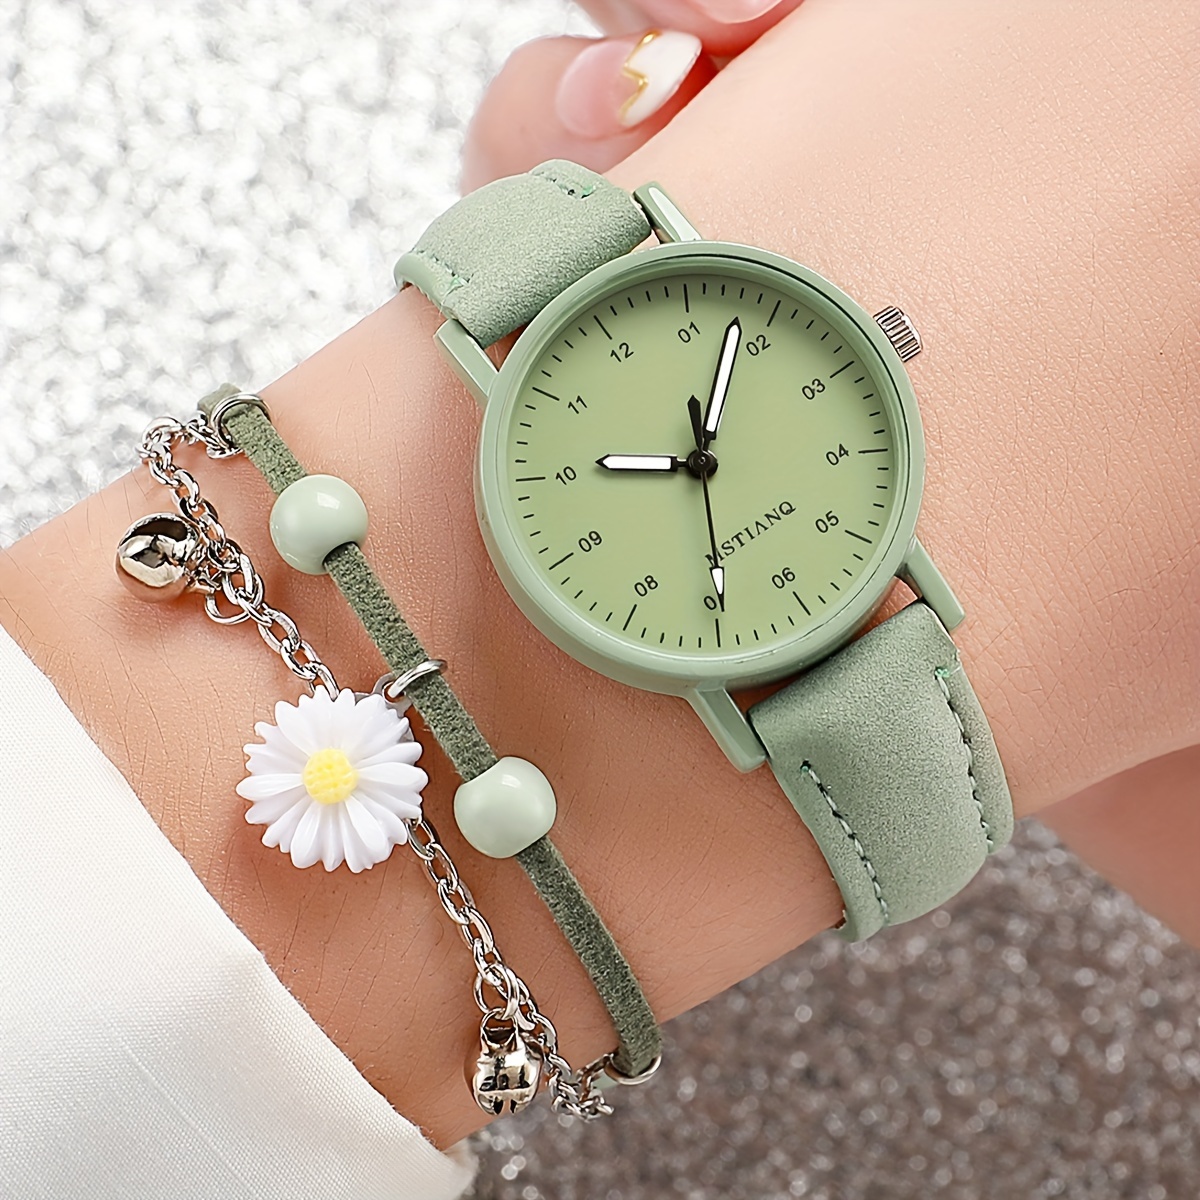 

2pcs/set Women's Cute Fashion Quartz Watch Analog Pu Leather Wrist Watch & Daisy Flower Bracelet, Gift For Daily Use Her